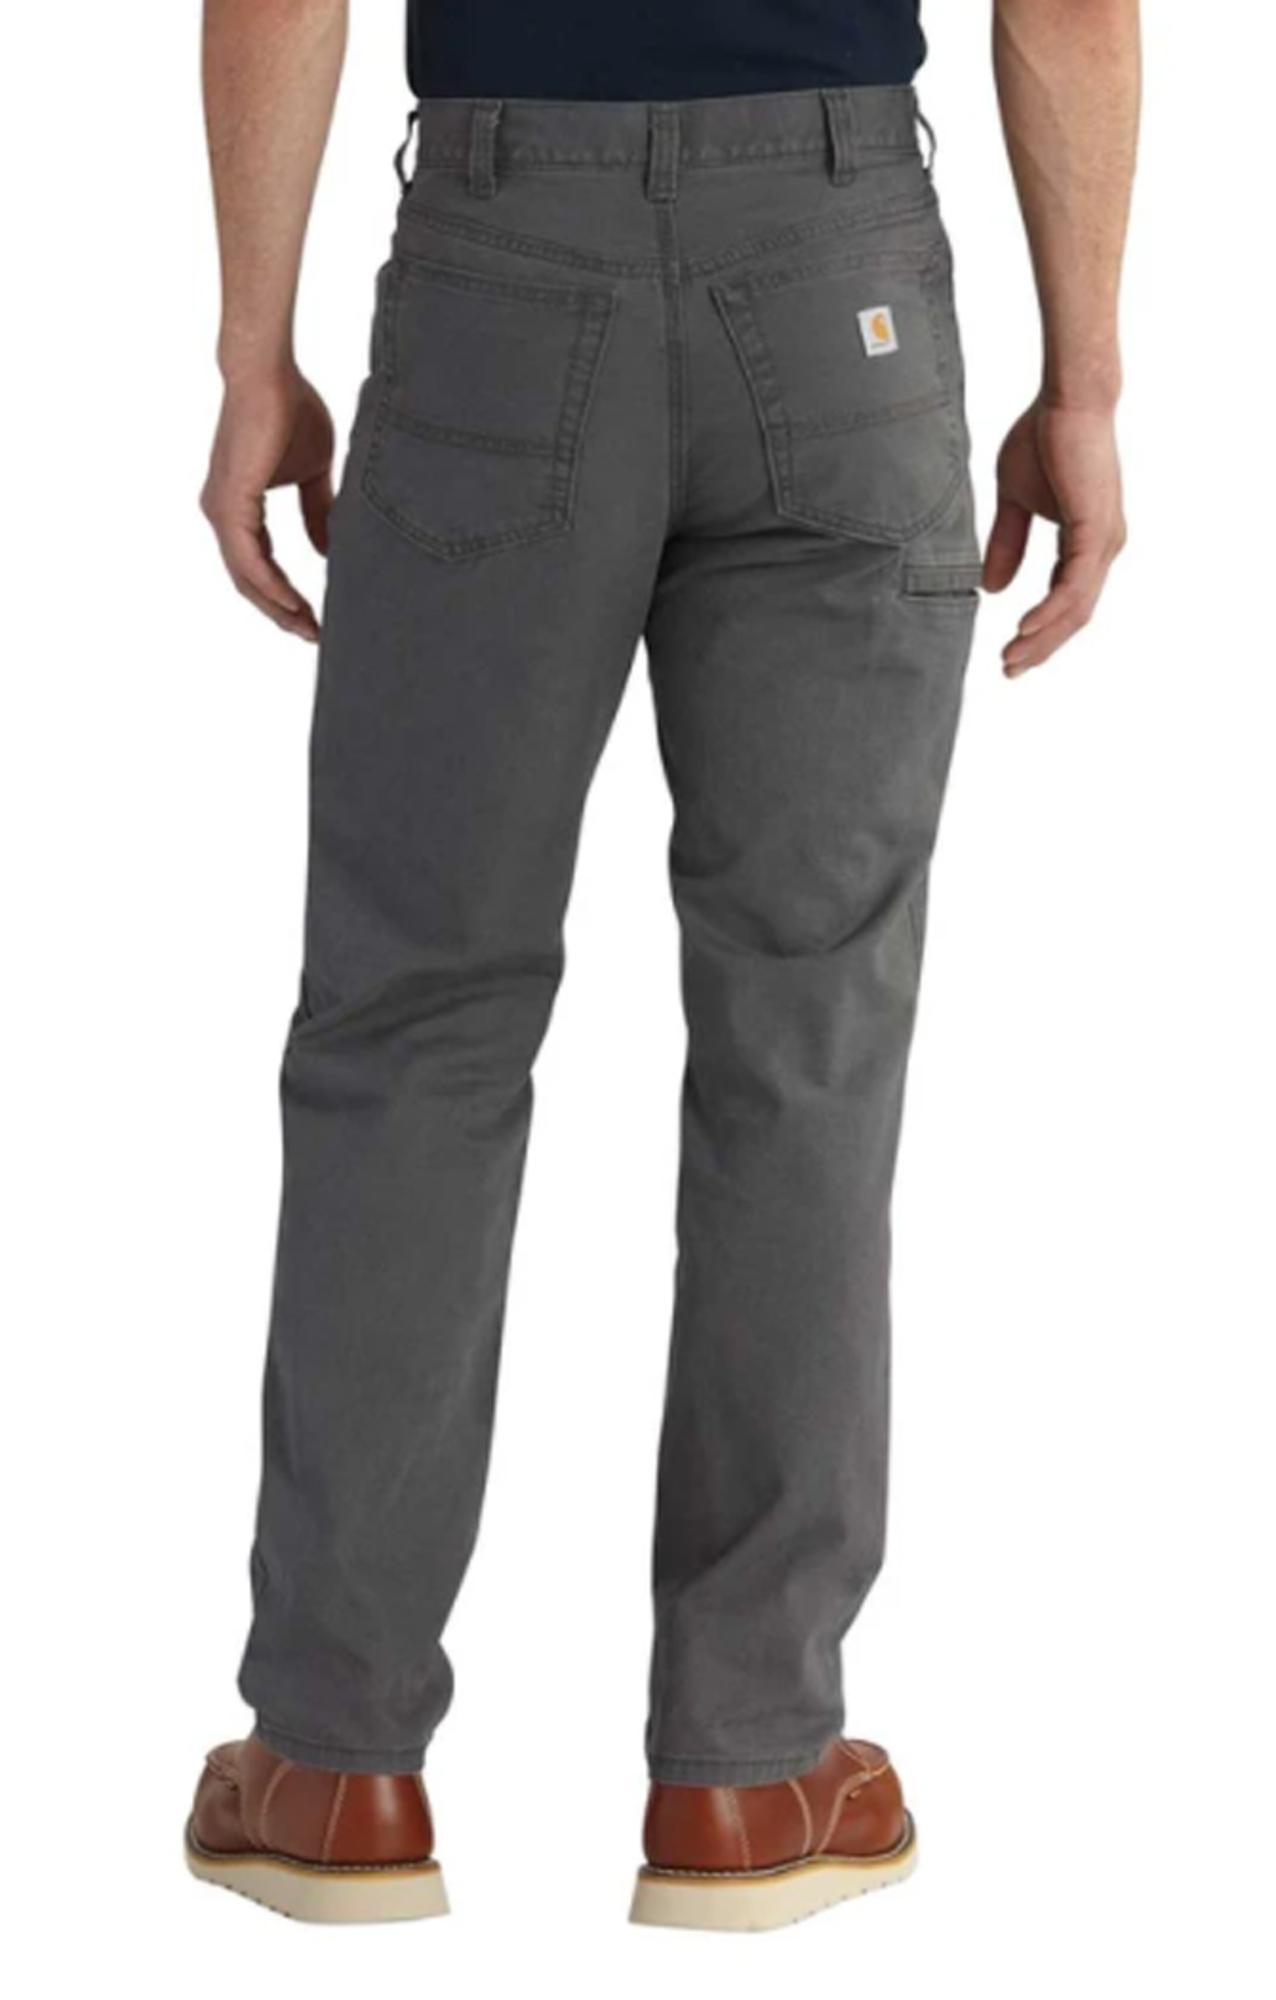 carhartt men's rugged flex rigby dungaree pants